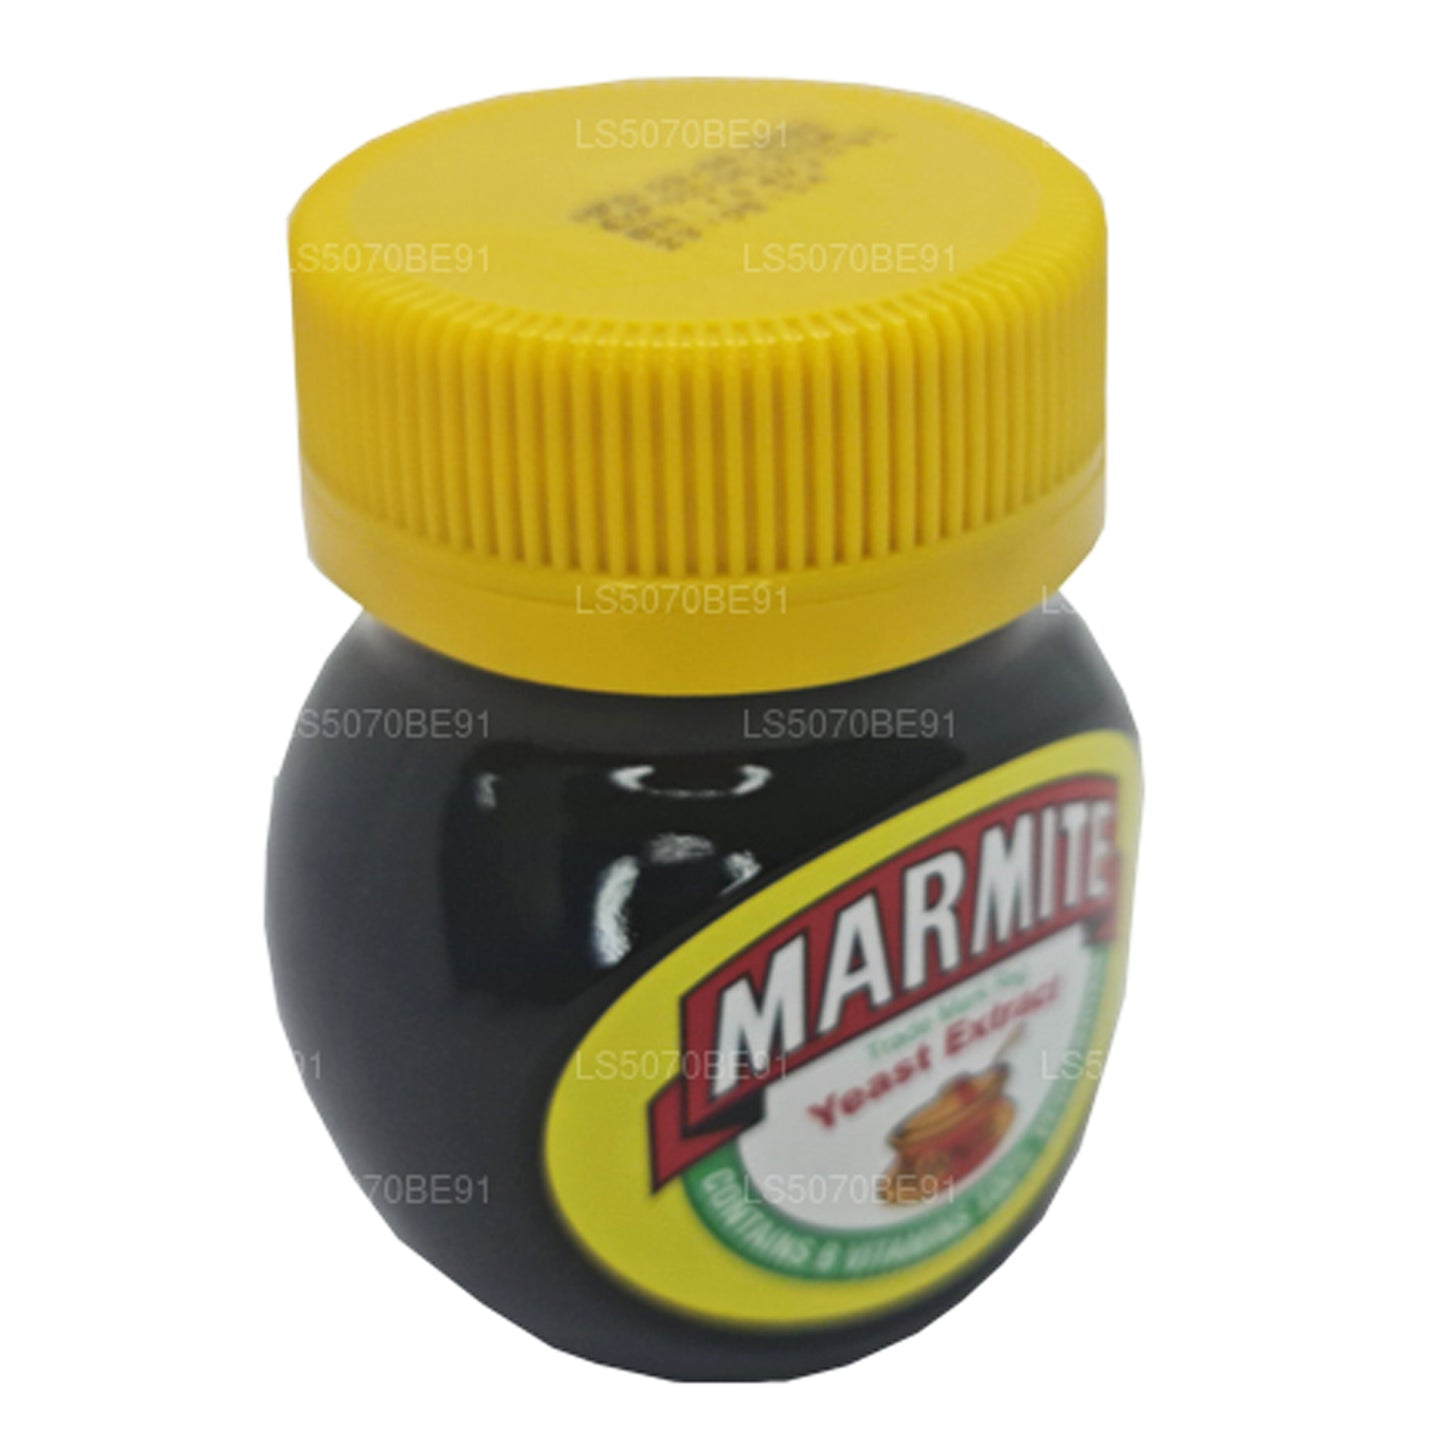 Marmite Yeast Extract (100g)